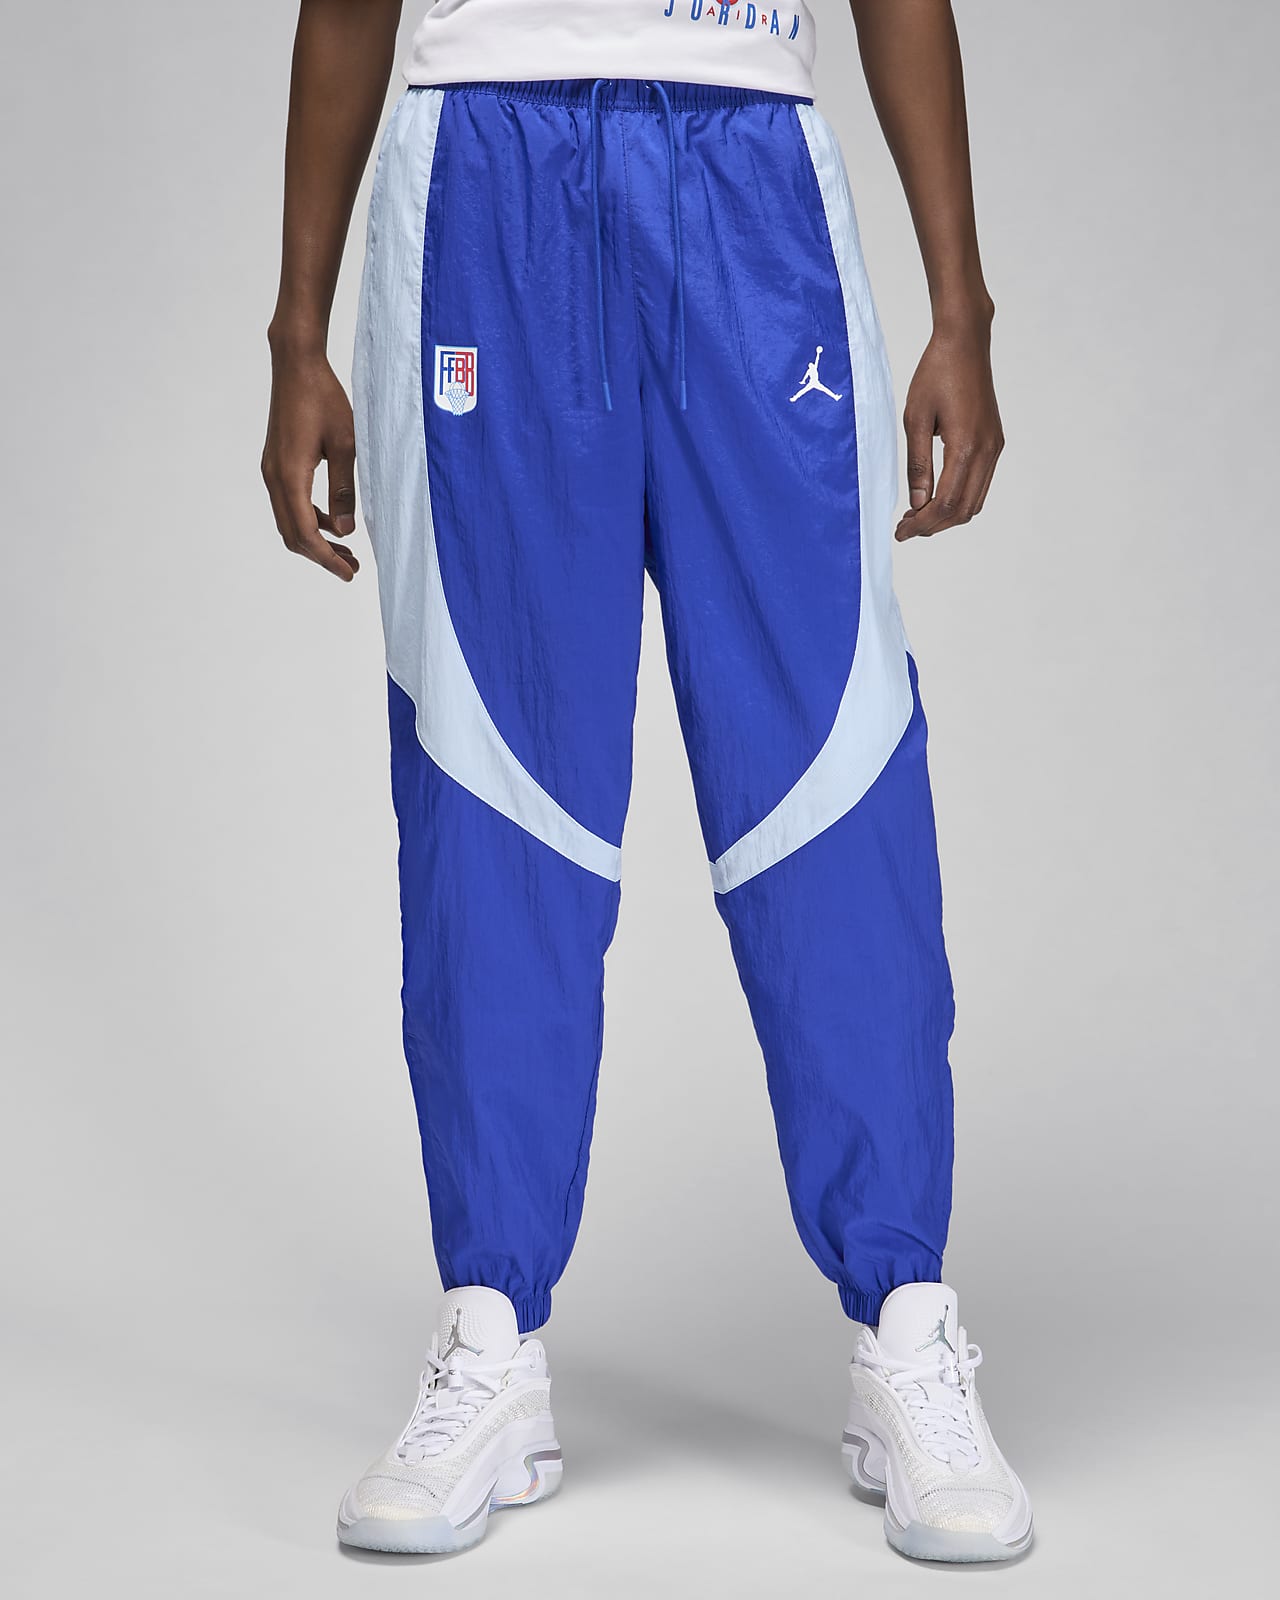 Jordan Sport JAM x Fédération Française de Basketball-opvarmningsbukser til mænd